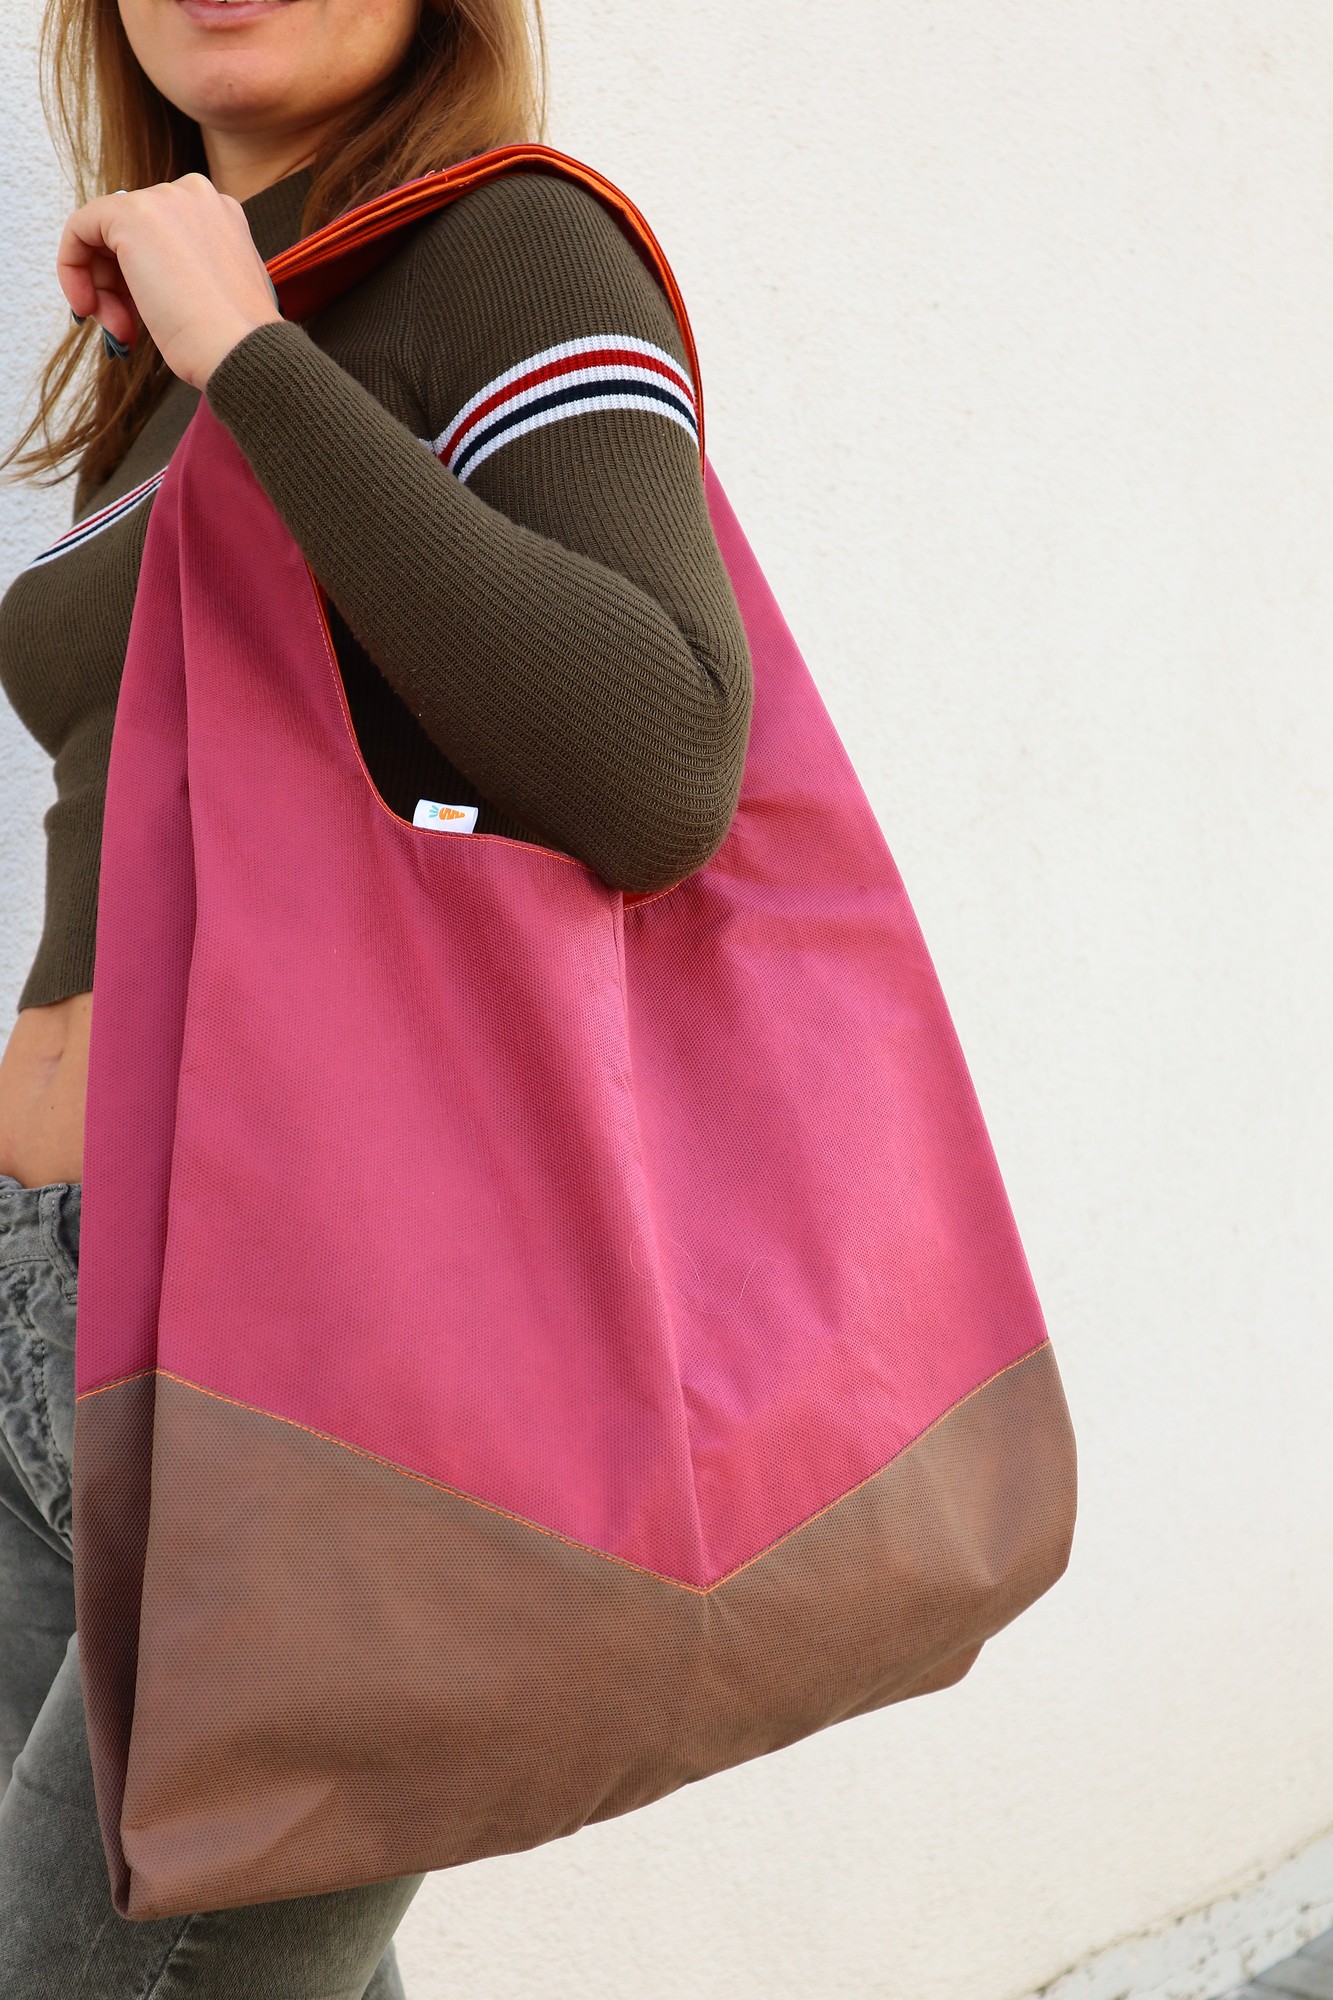 Large two-color shopper for shopping "Rick", bag handmade.